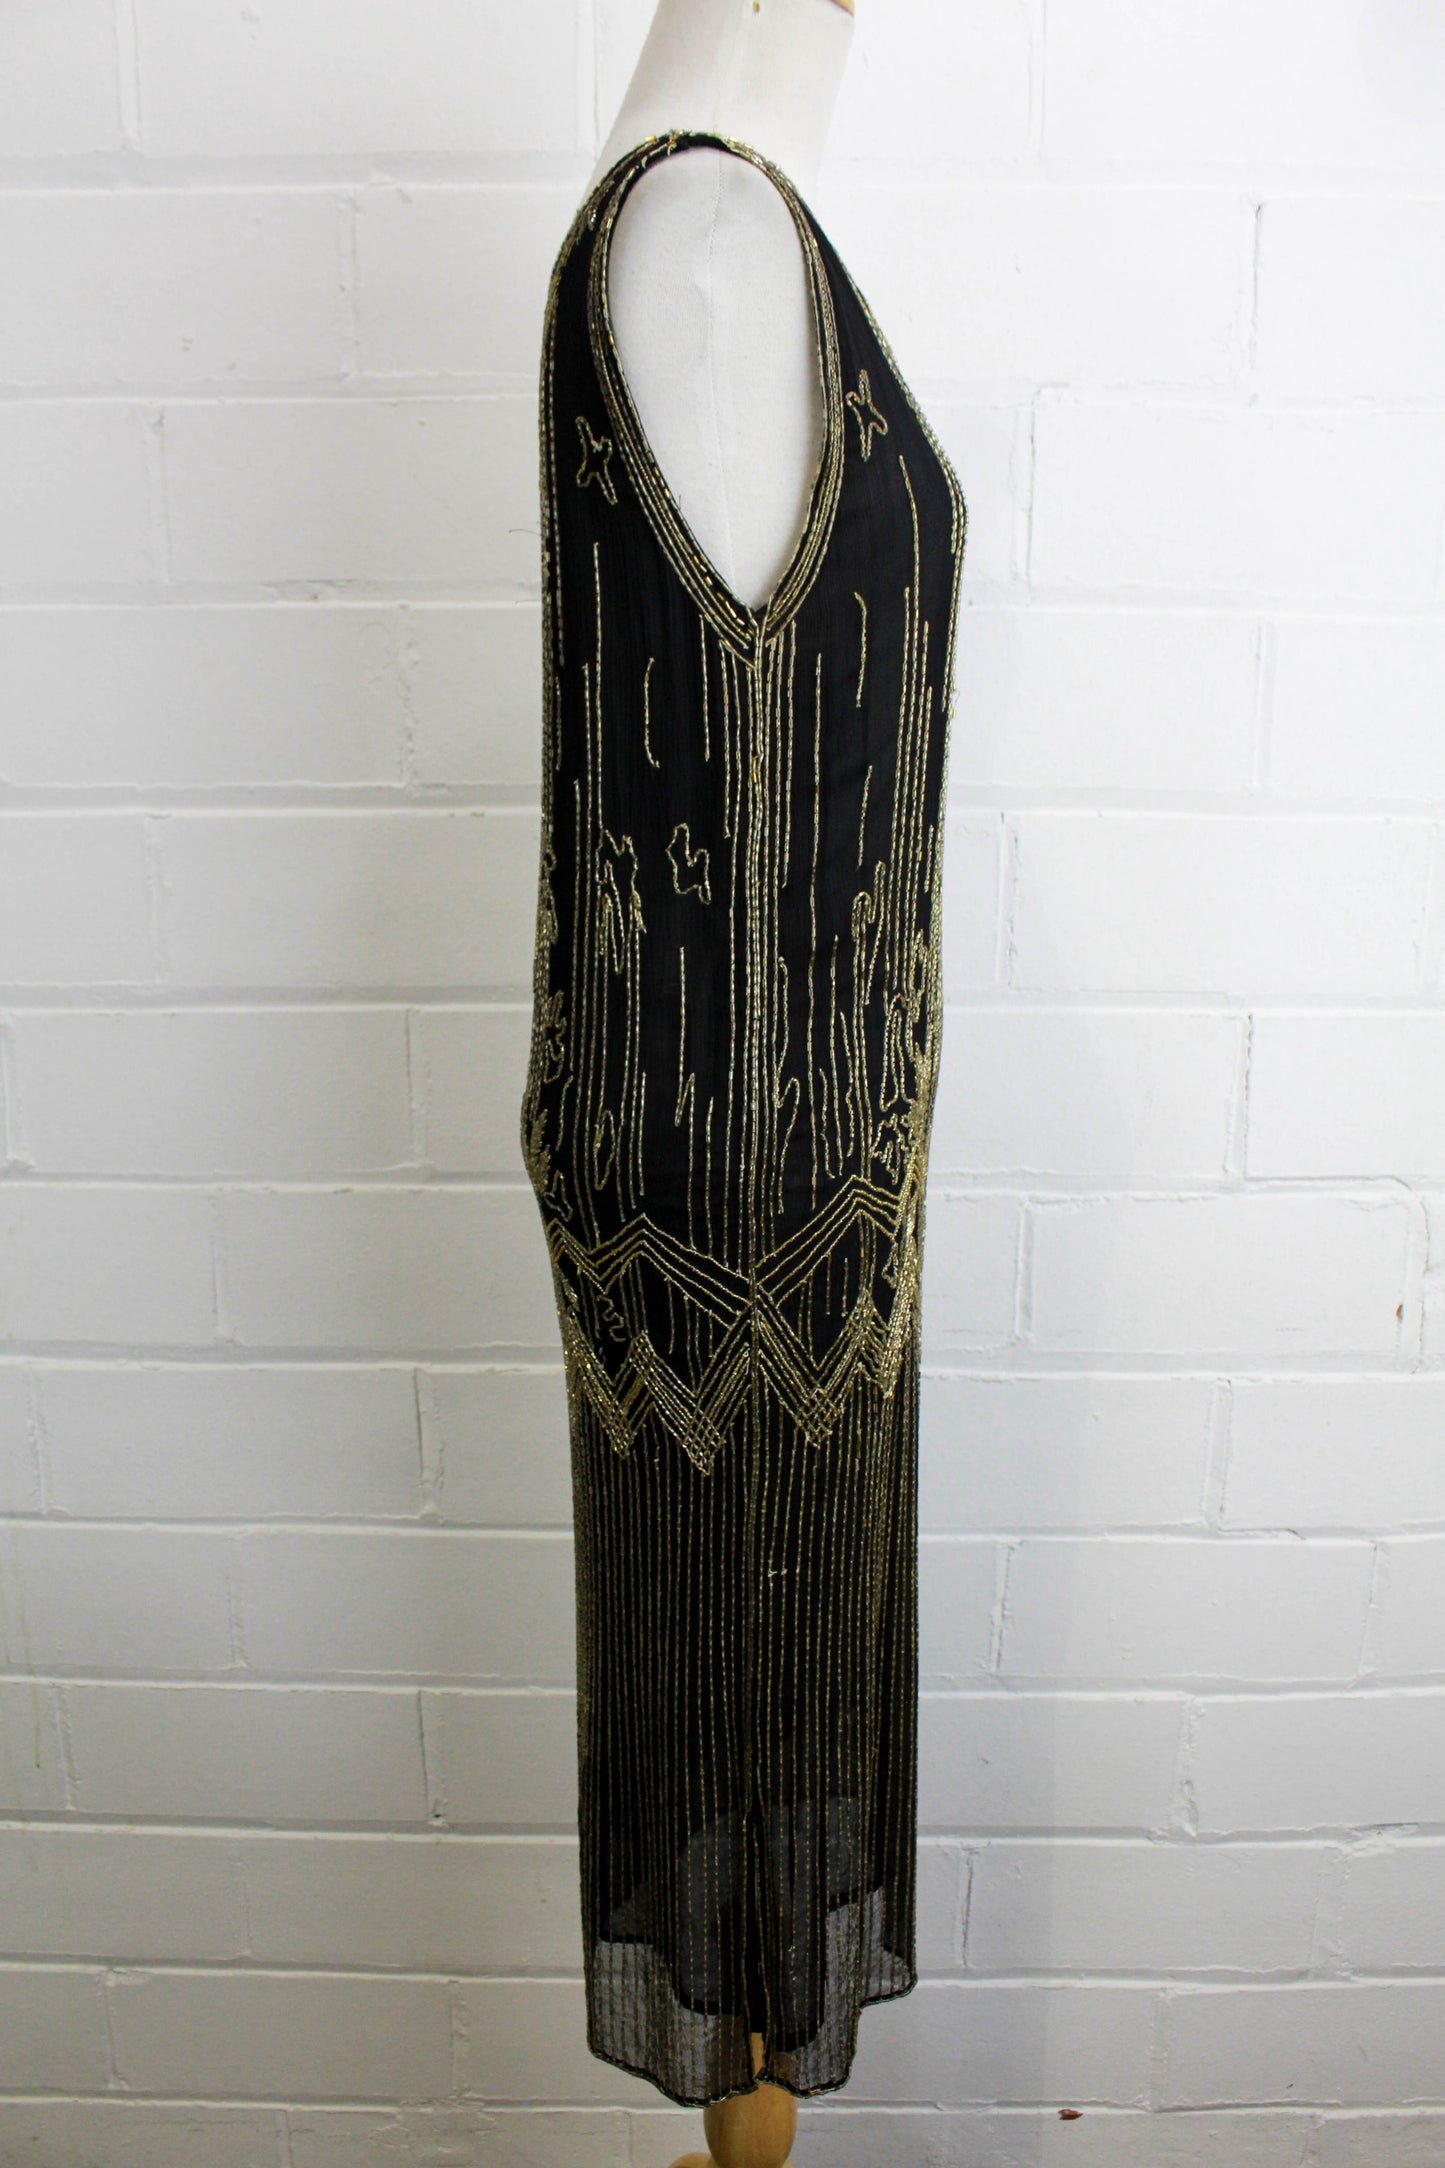 1920s silk beaded cocktail dress, black chiffon with gold beads, flapper dress art deco period